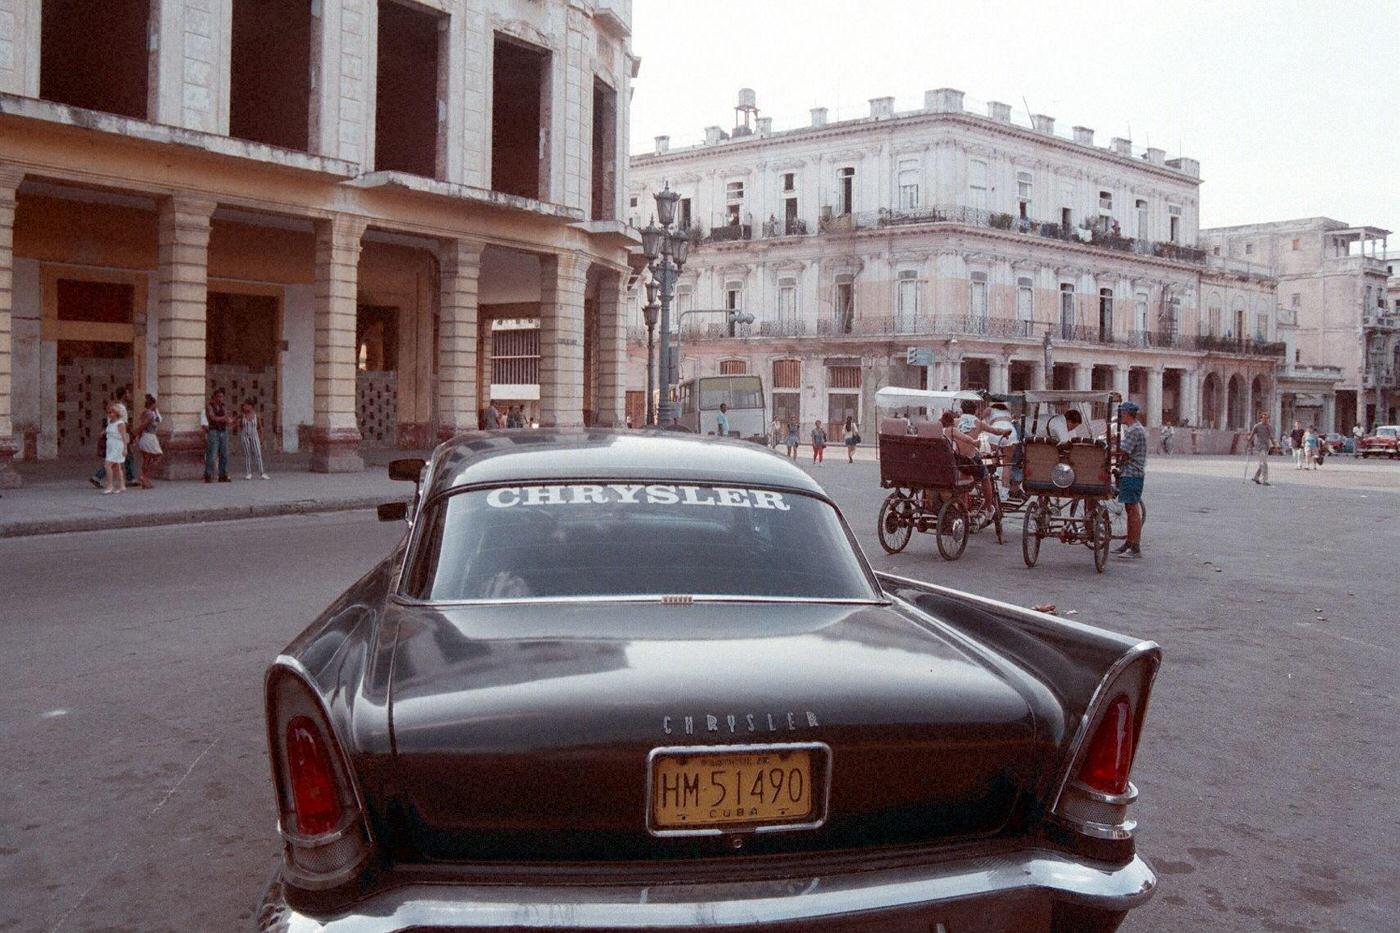 Auto in Havana, Cuba.